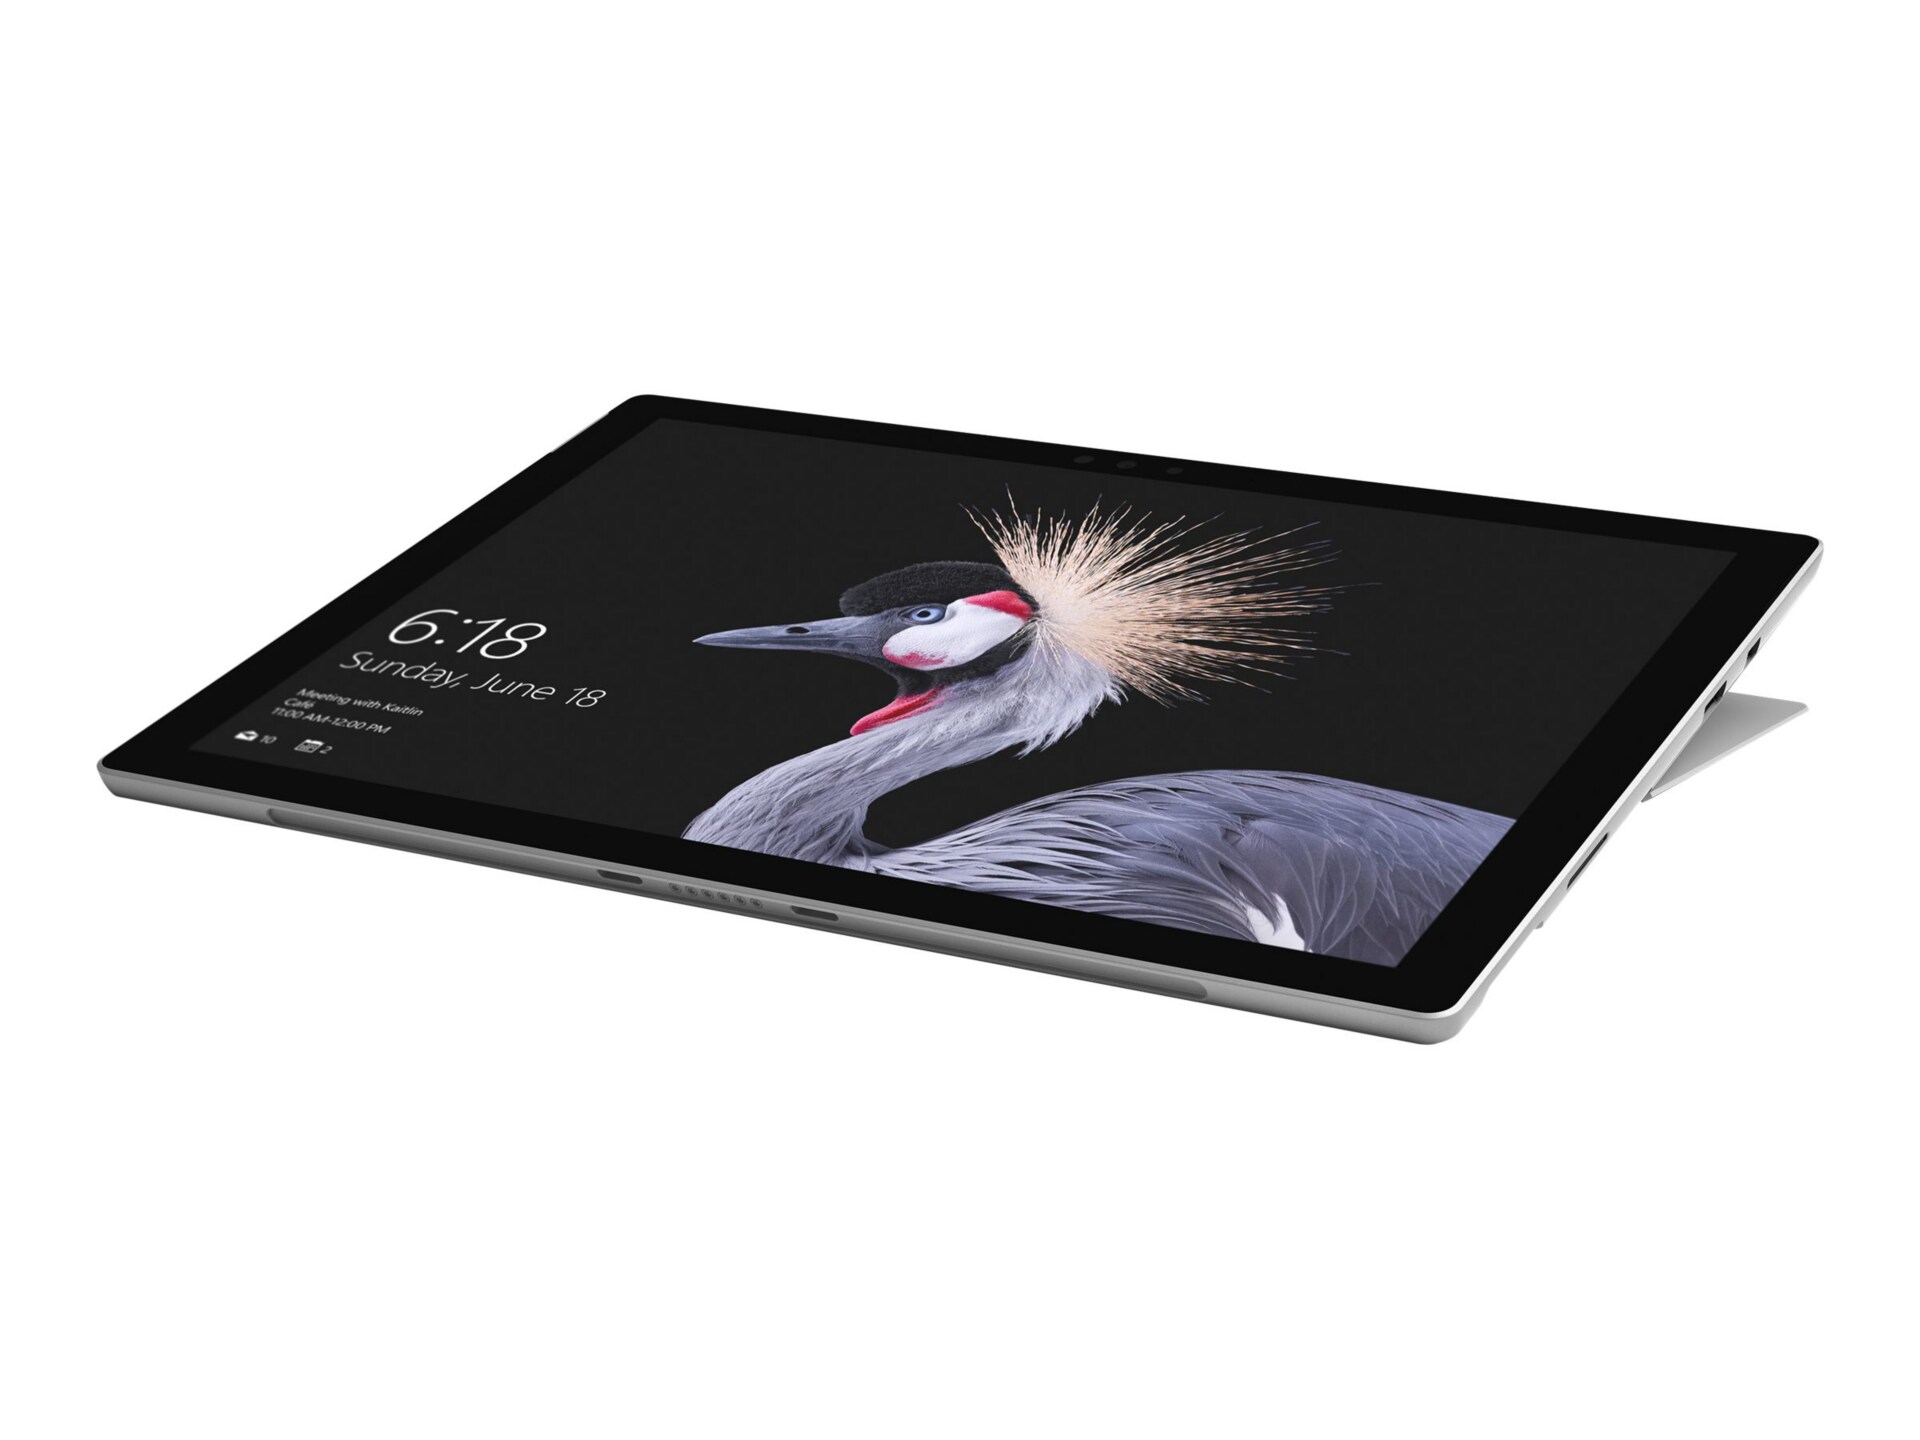 Microsoft Surface Pro 12.3" Core m3-7Y30 4GB RAM 128GB SSD Windows 10 Pro